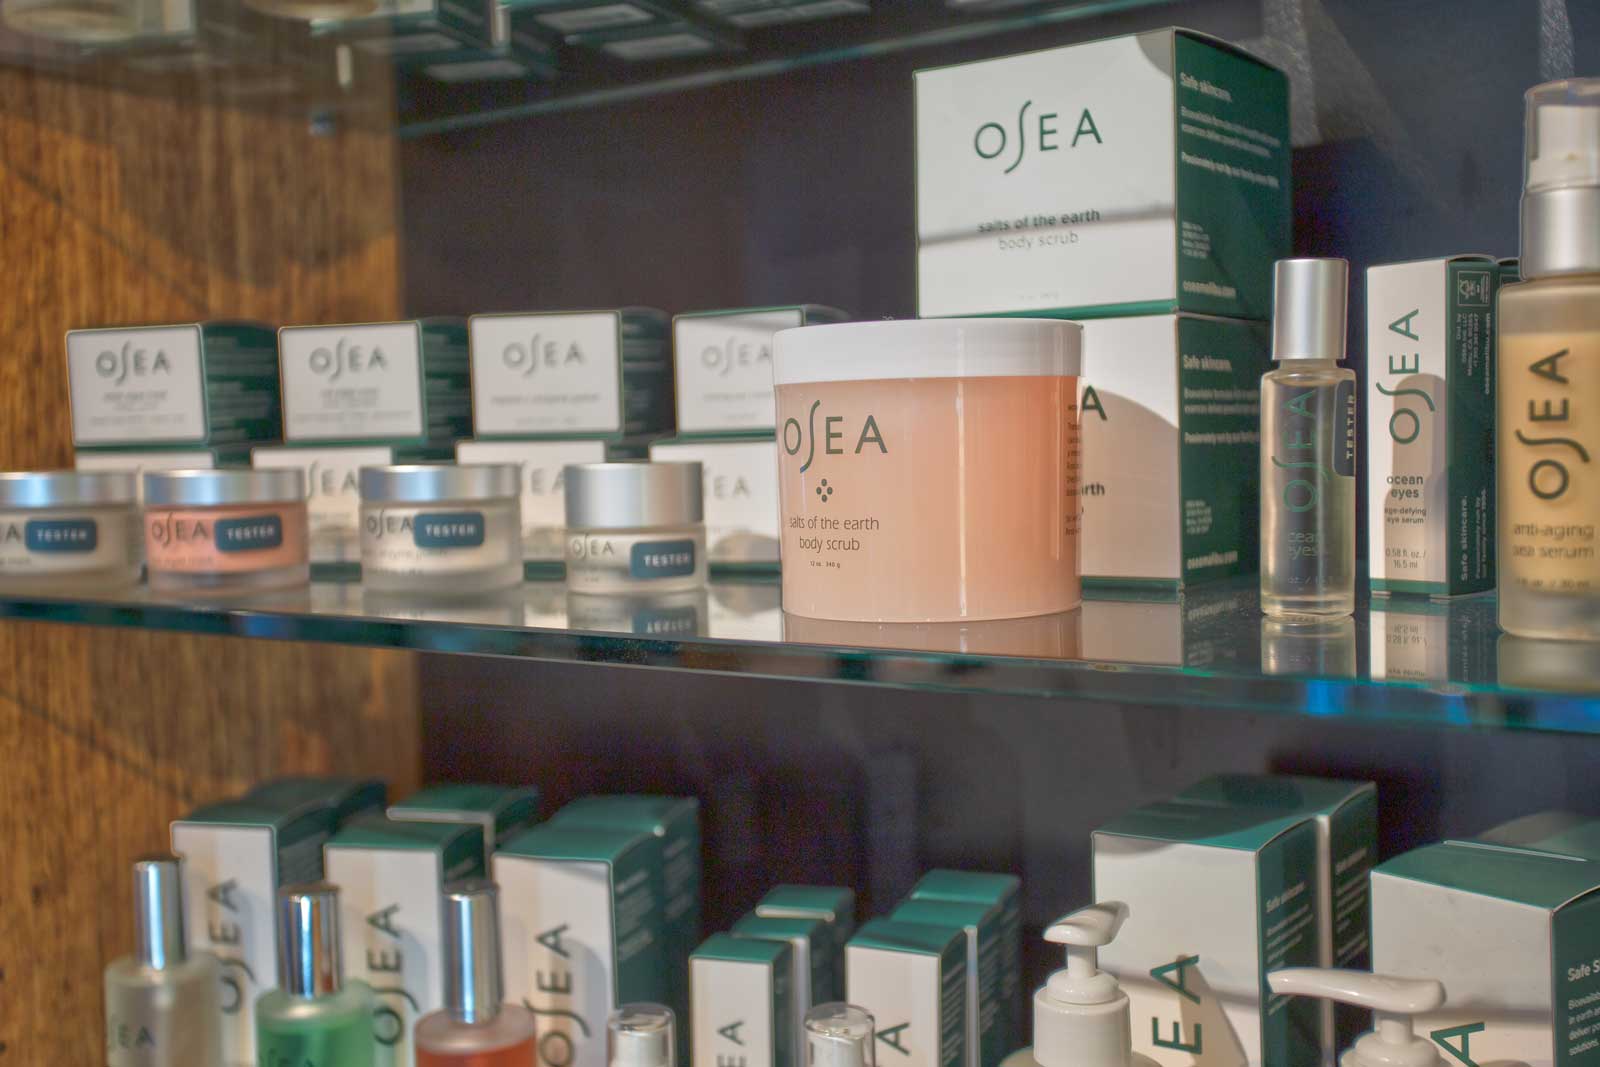 Spa Manzanita features OSEA products